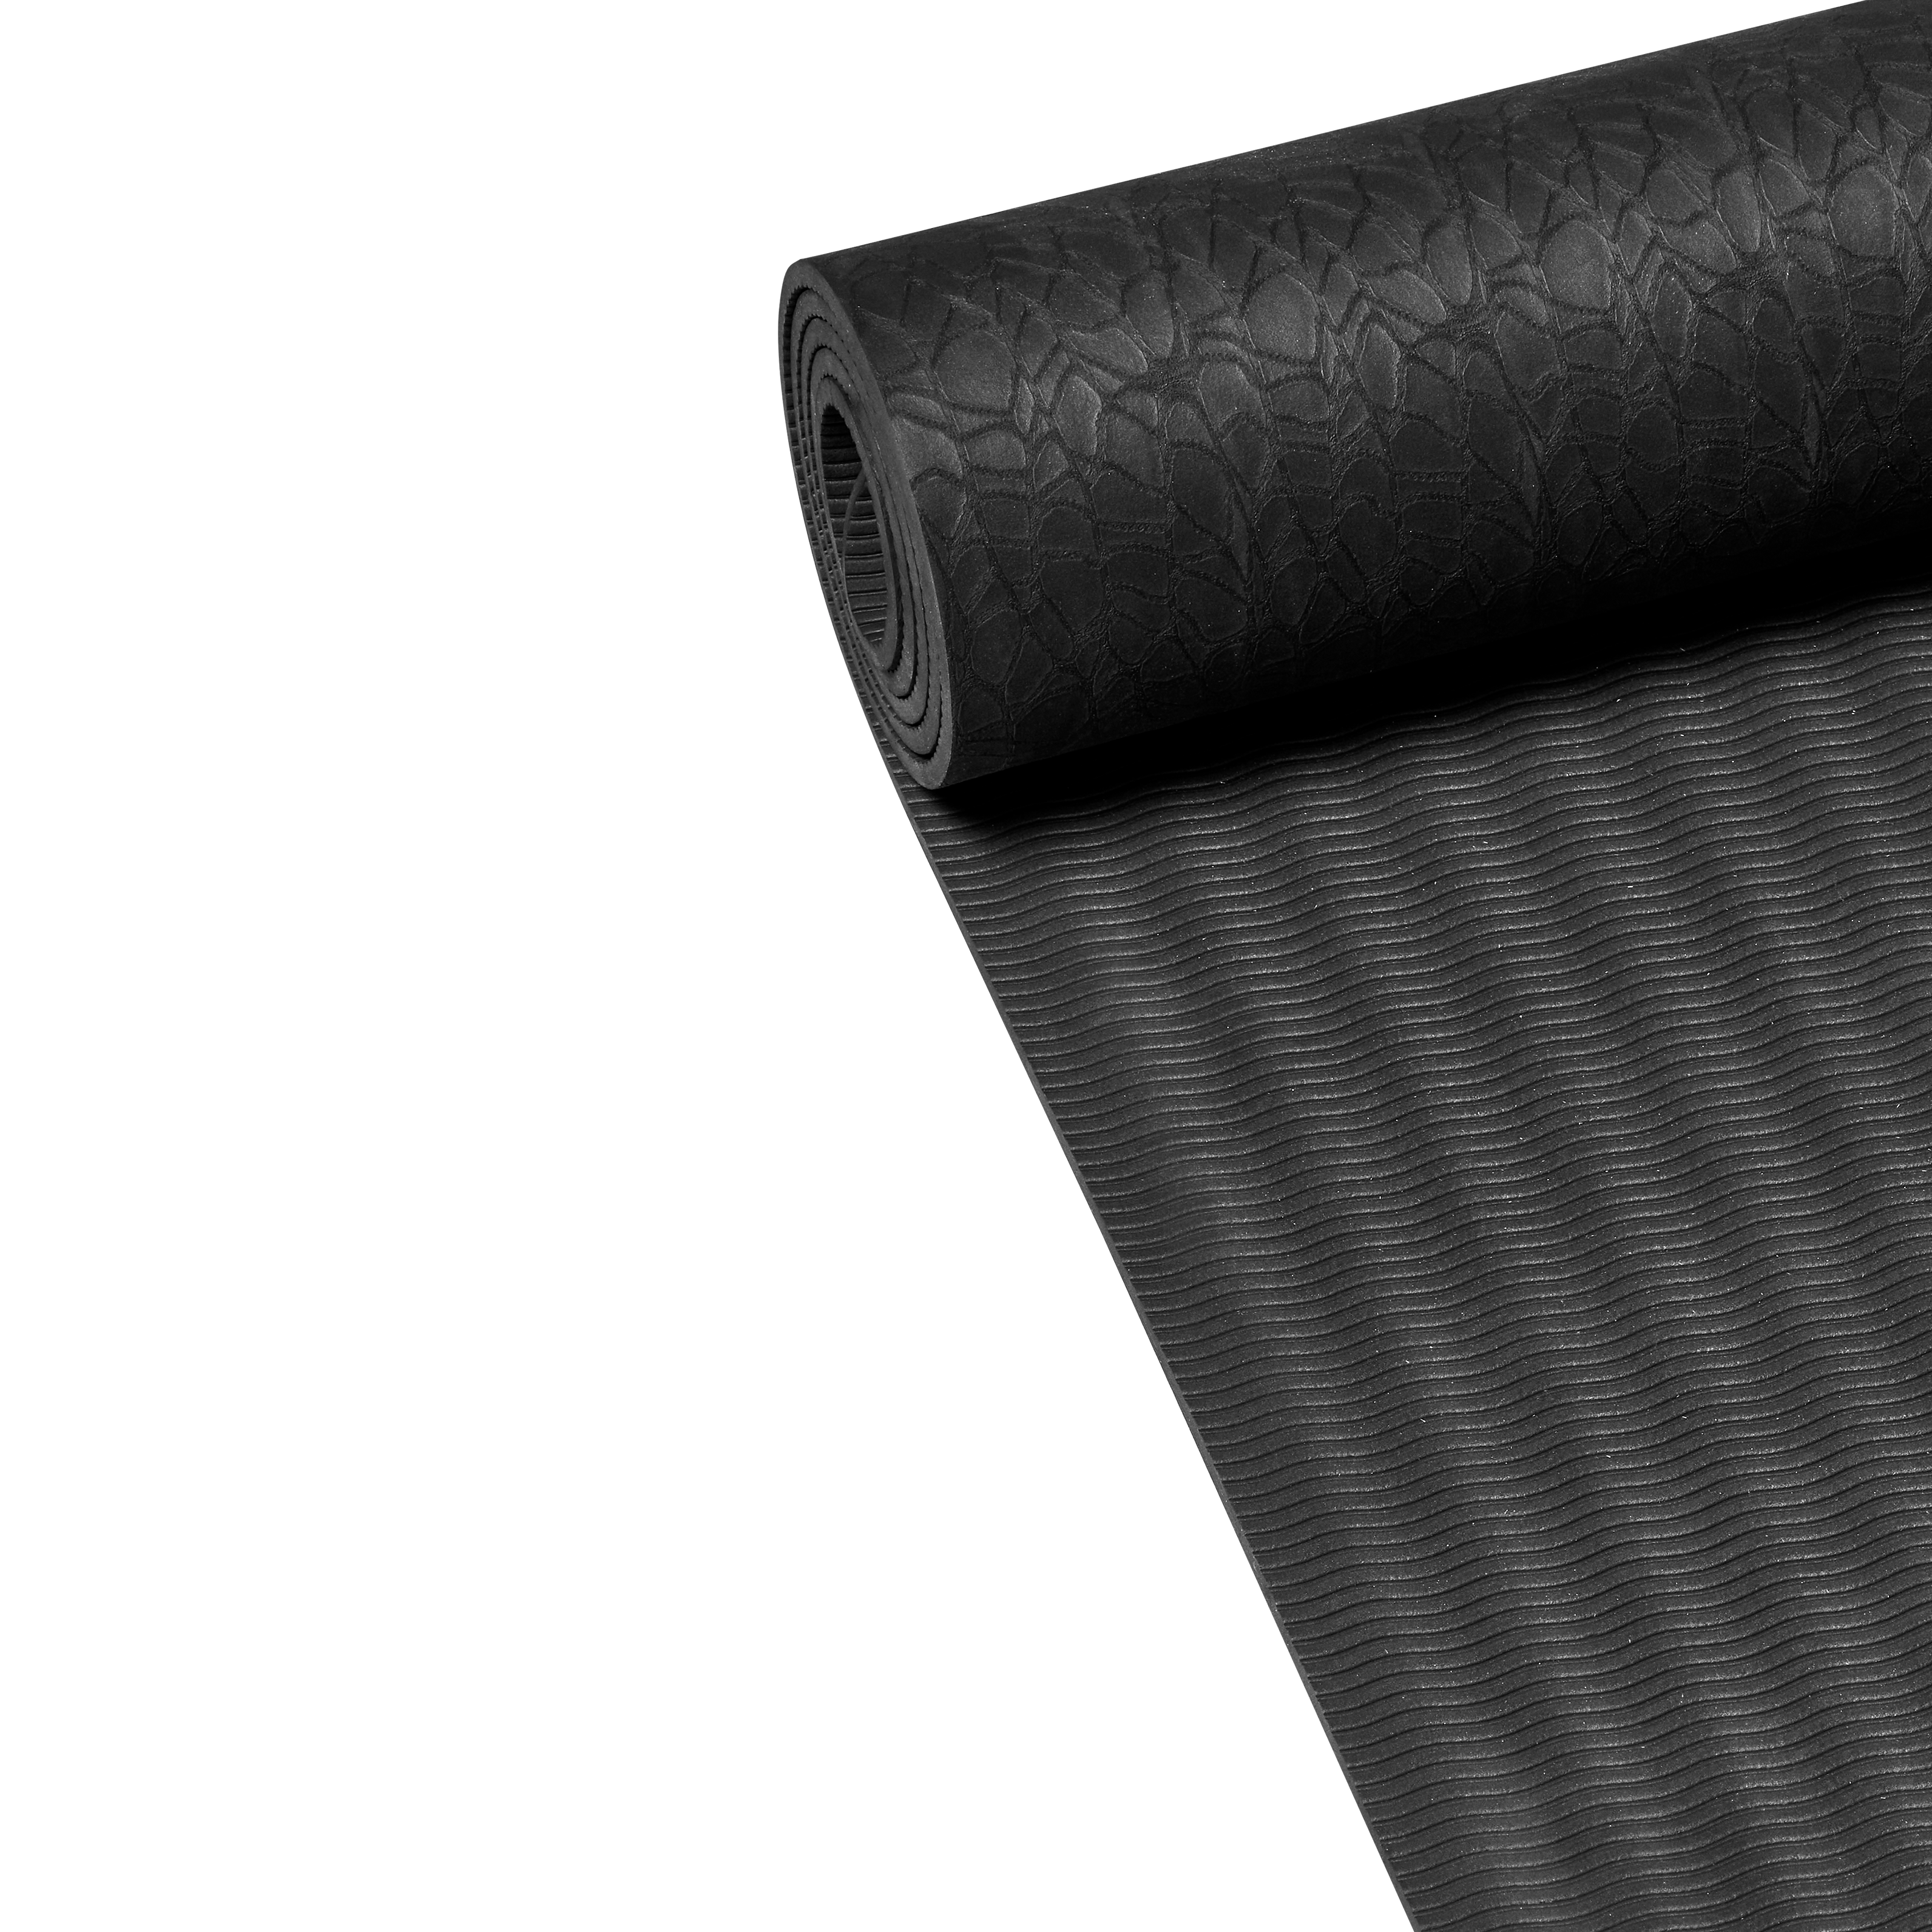 Exercise mat Cushion 5mm, Black